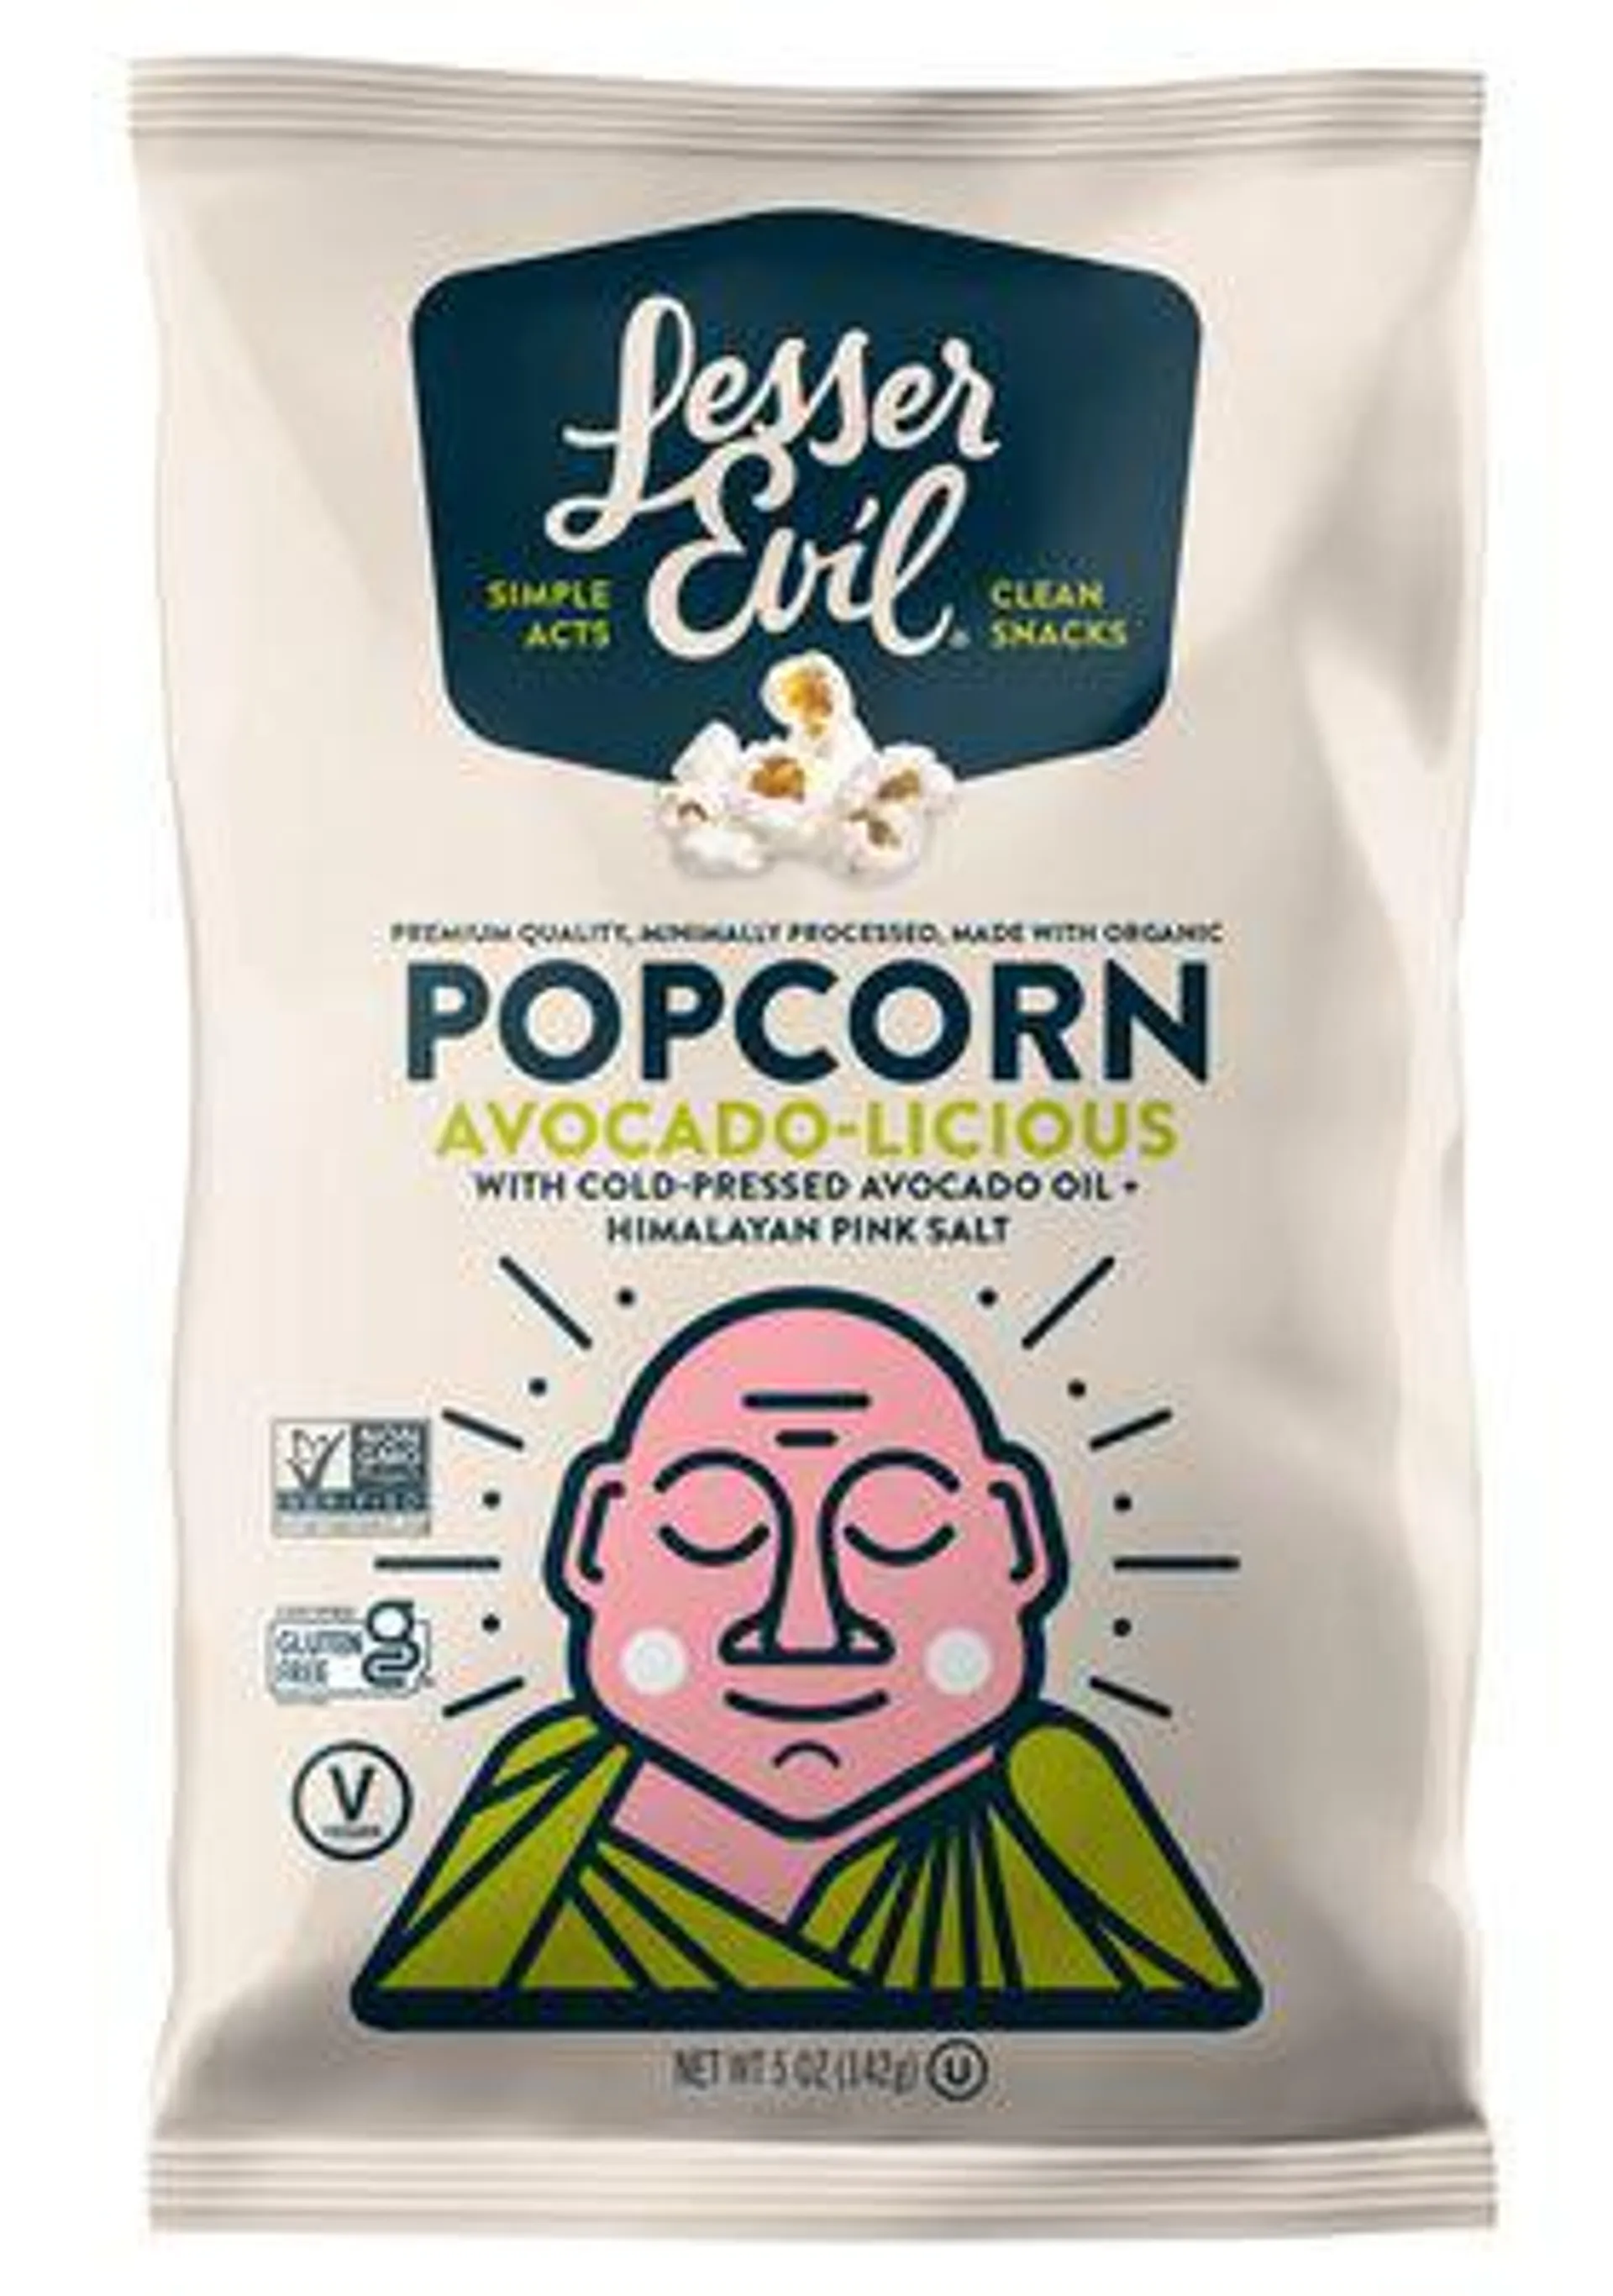 Lesser Evil Avocado-Licious Organic Popcorn